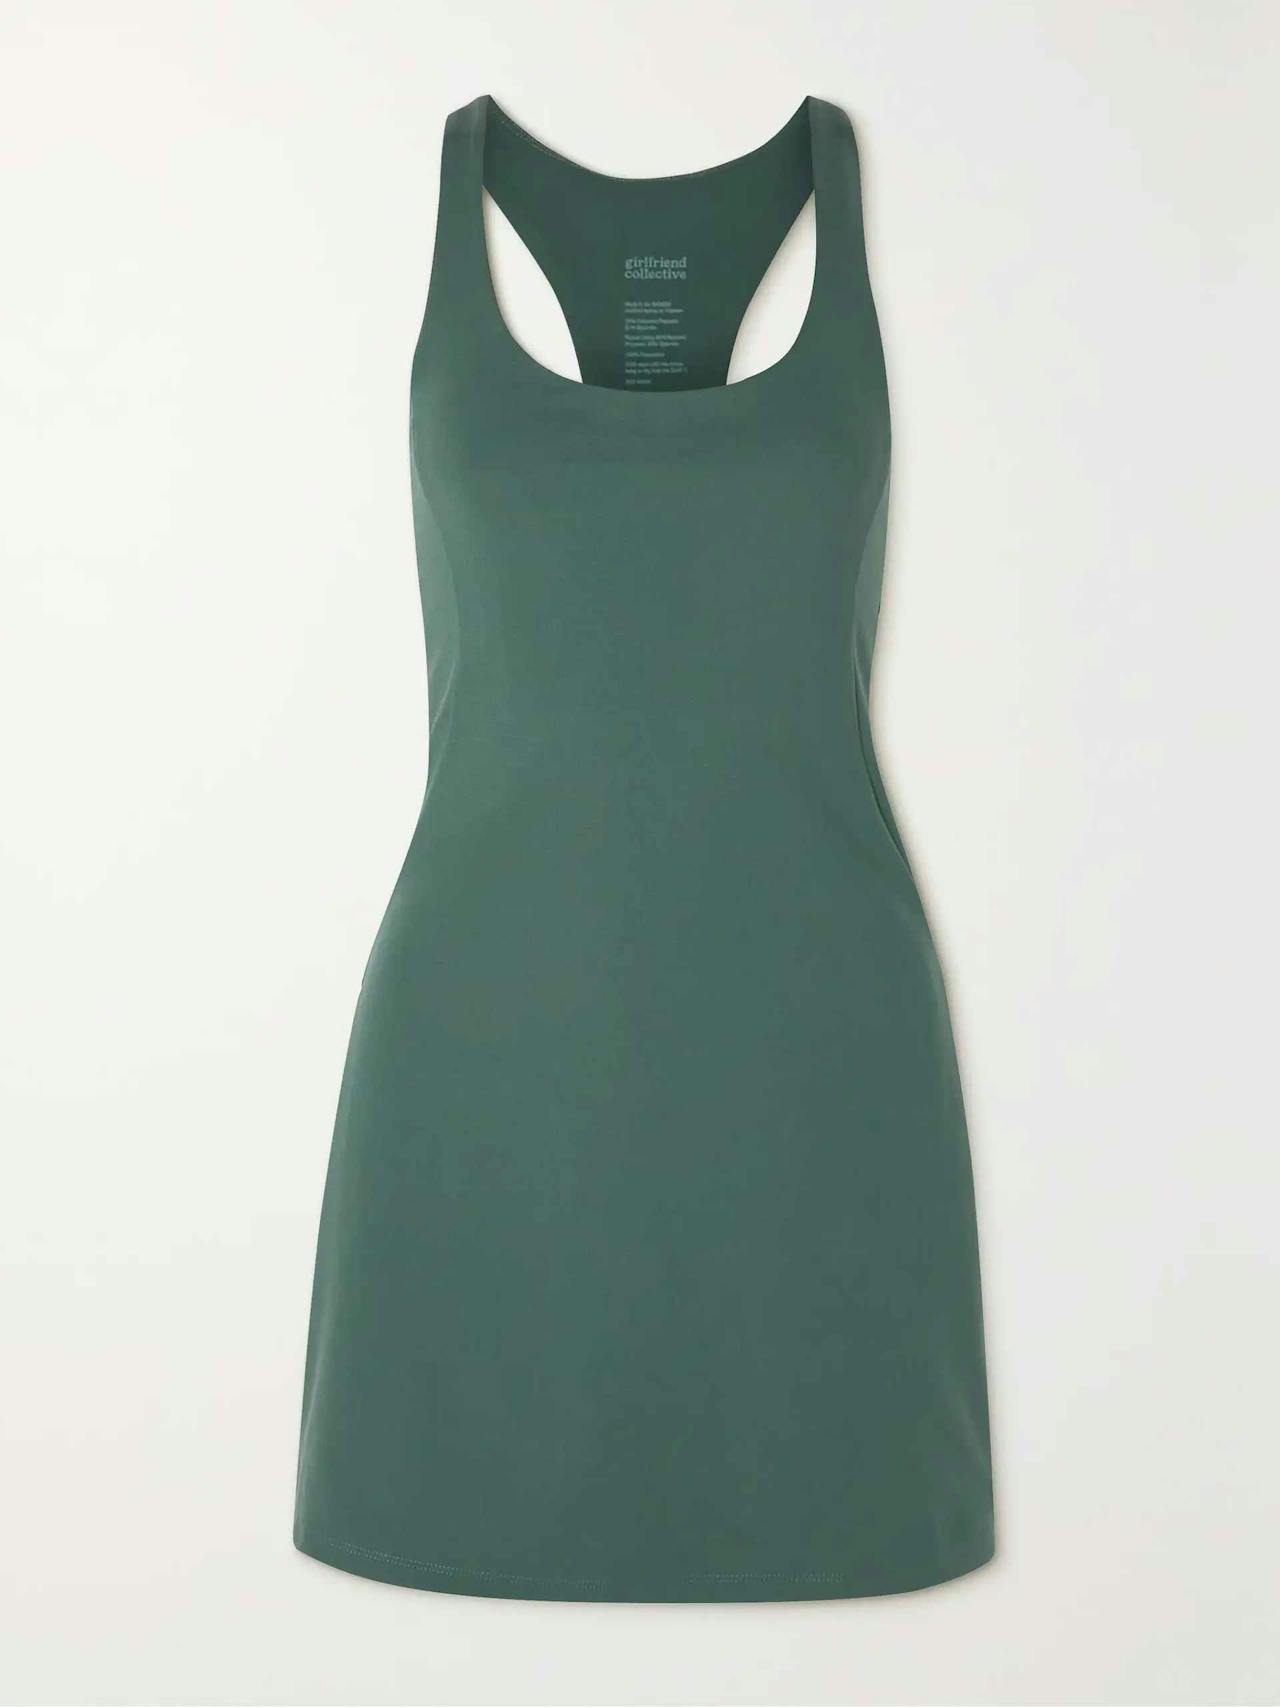 Paloma recycled stretch-jersey tennis dress